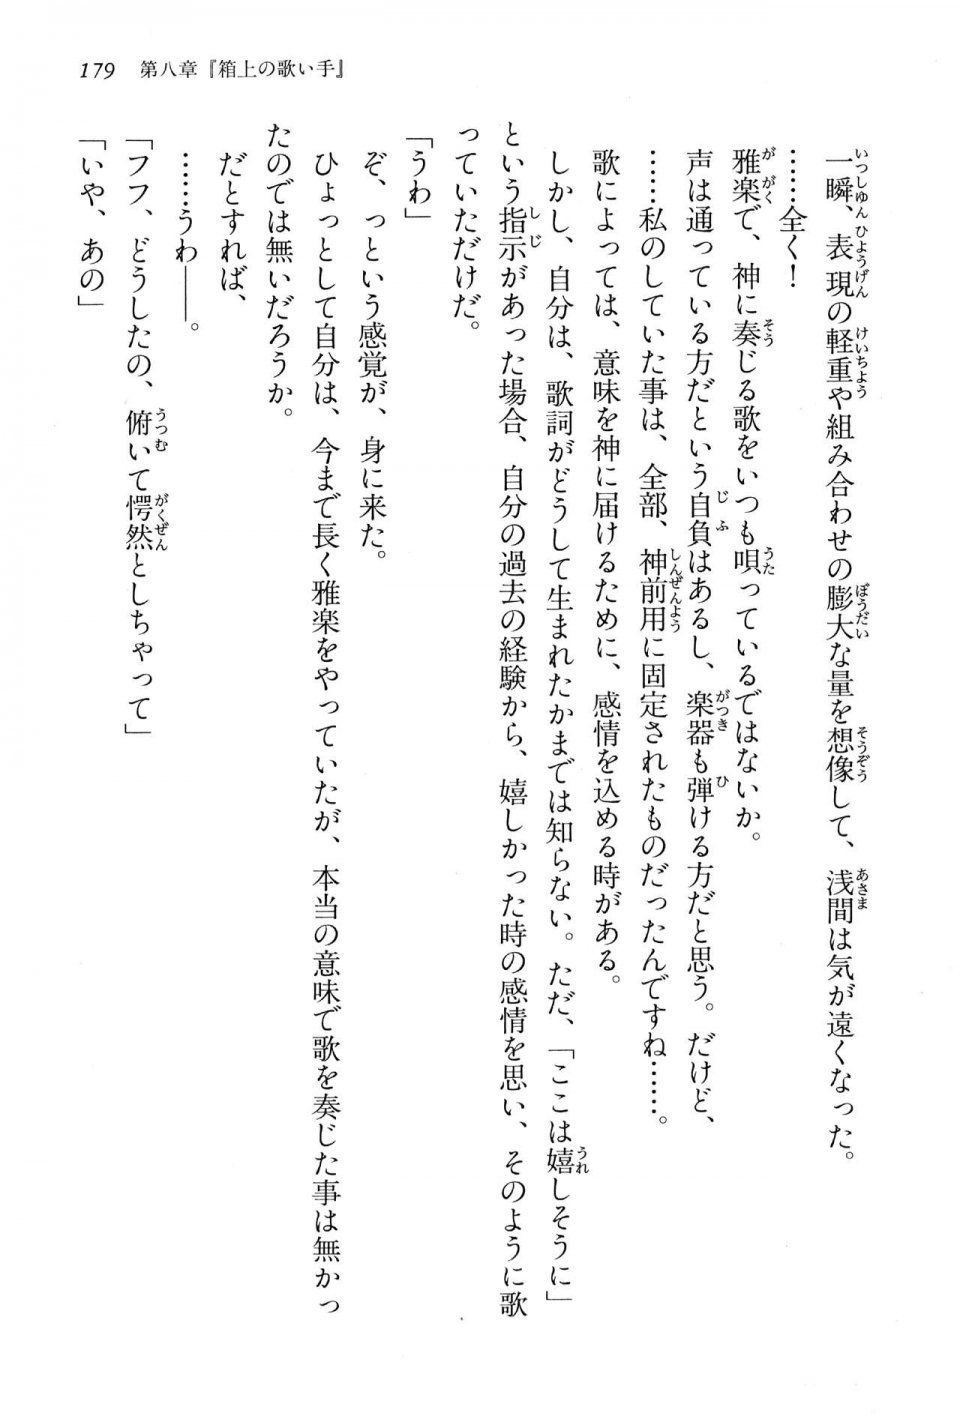 Kyoukai Senjou no Horizon BD Special Mininovel Vol 2(1B) - Photo #183